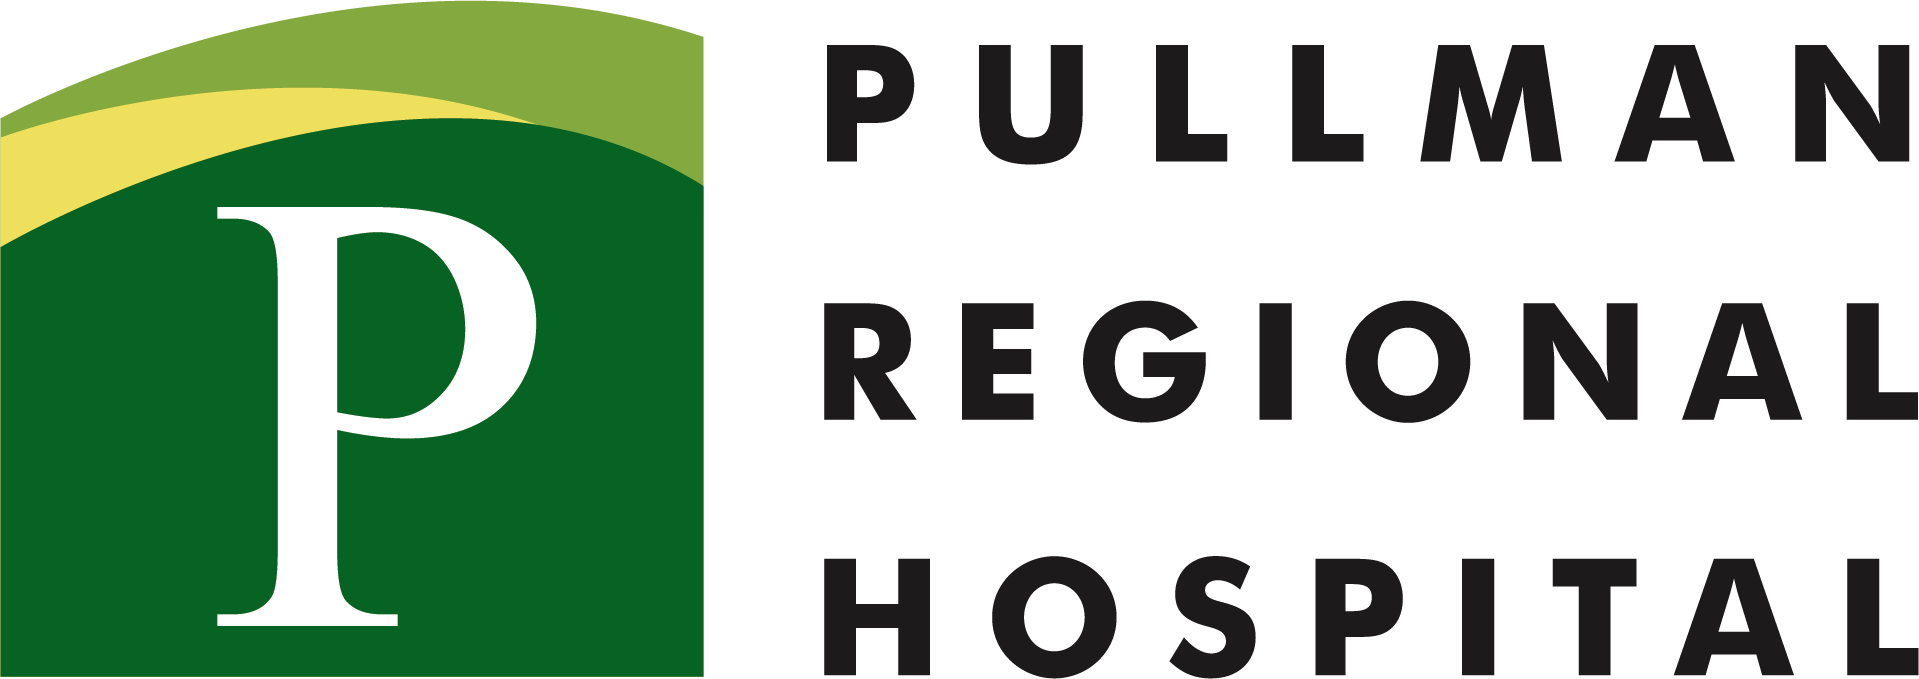 Pullman Regional Hospital Logo_Full Color.png